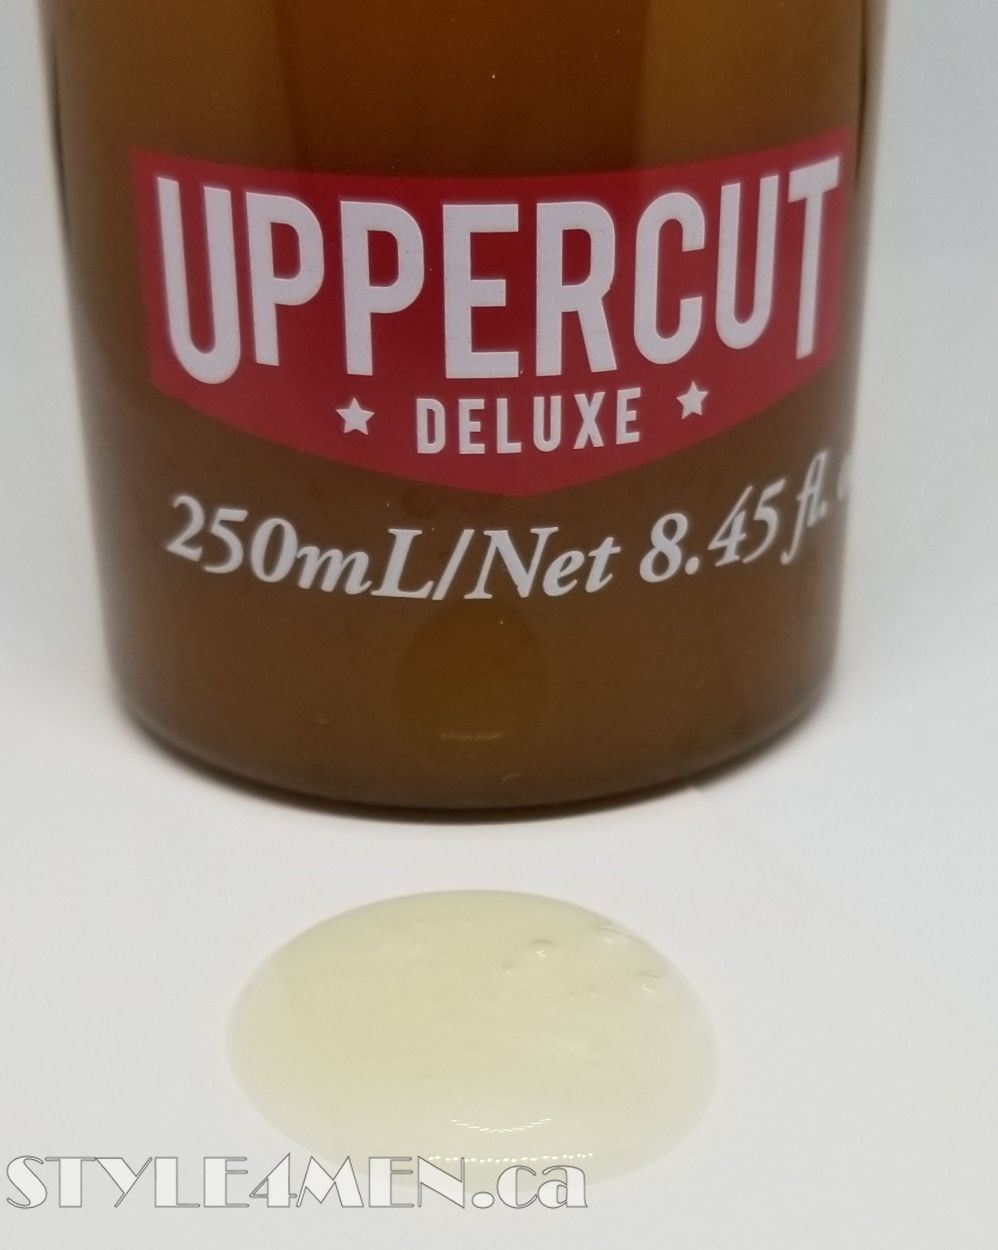 Uppercut Deluxe Shampoo Set